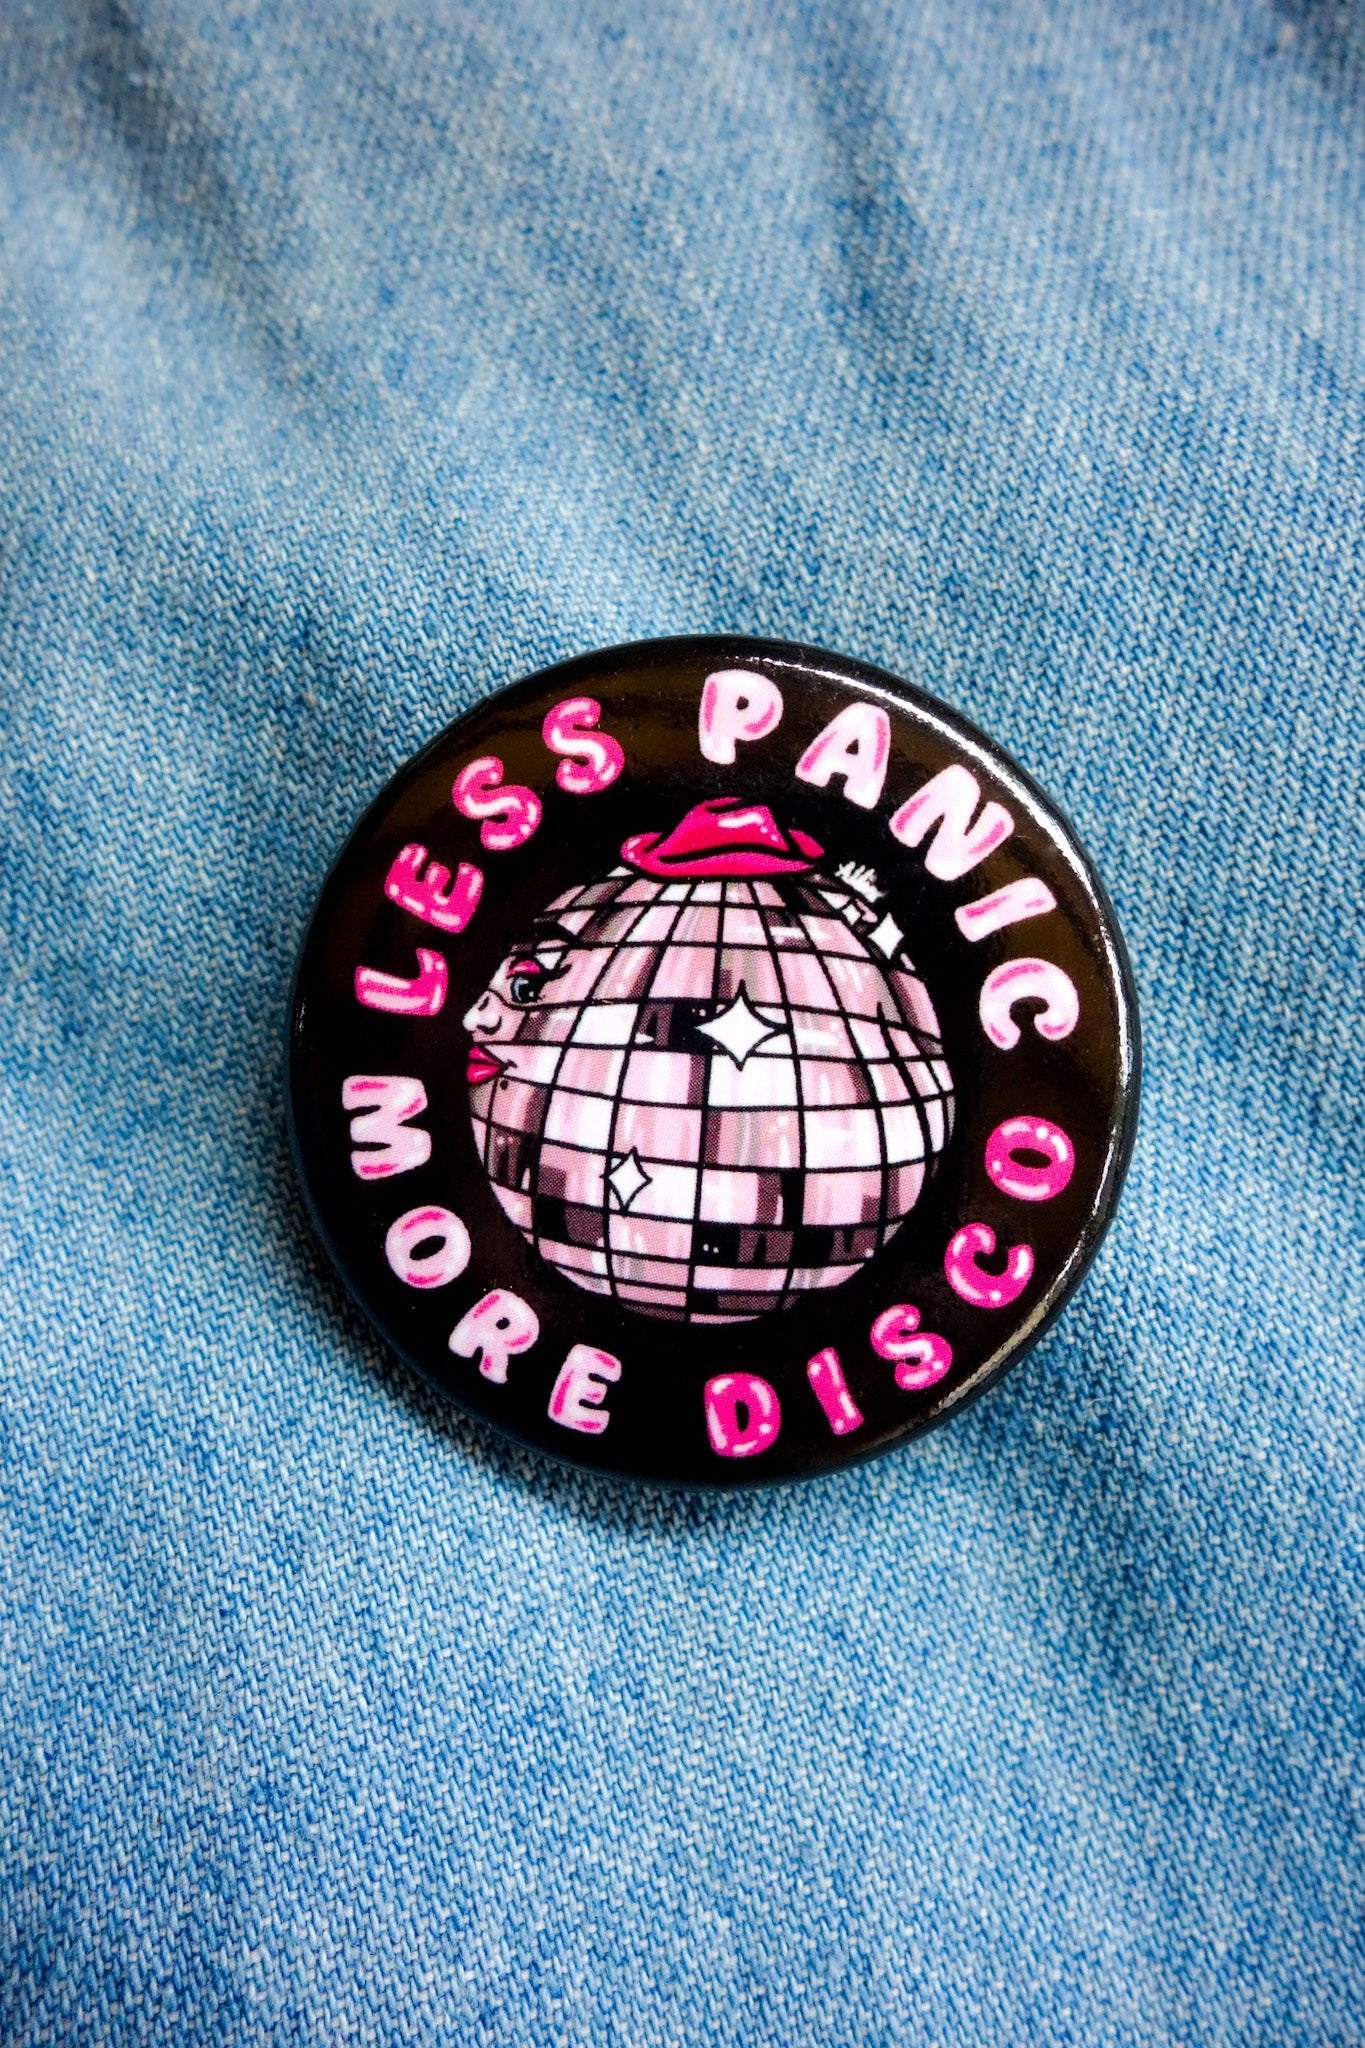 Less Panic More Disco Pin Button - Cheeky Art Studio